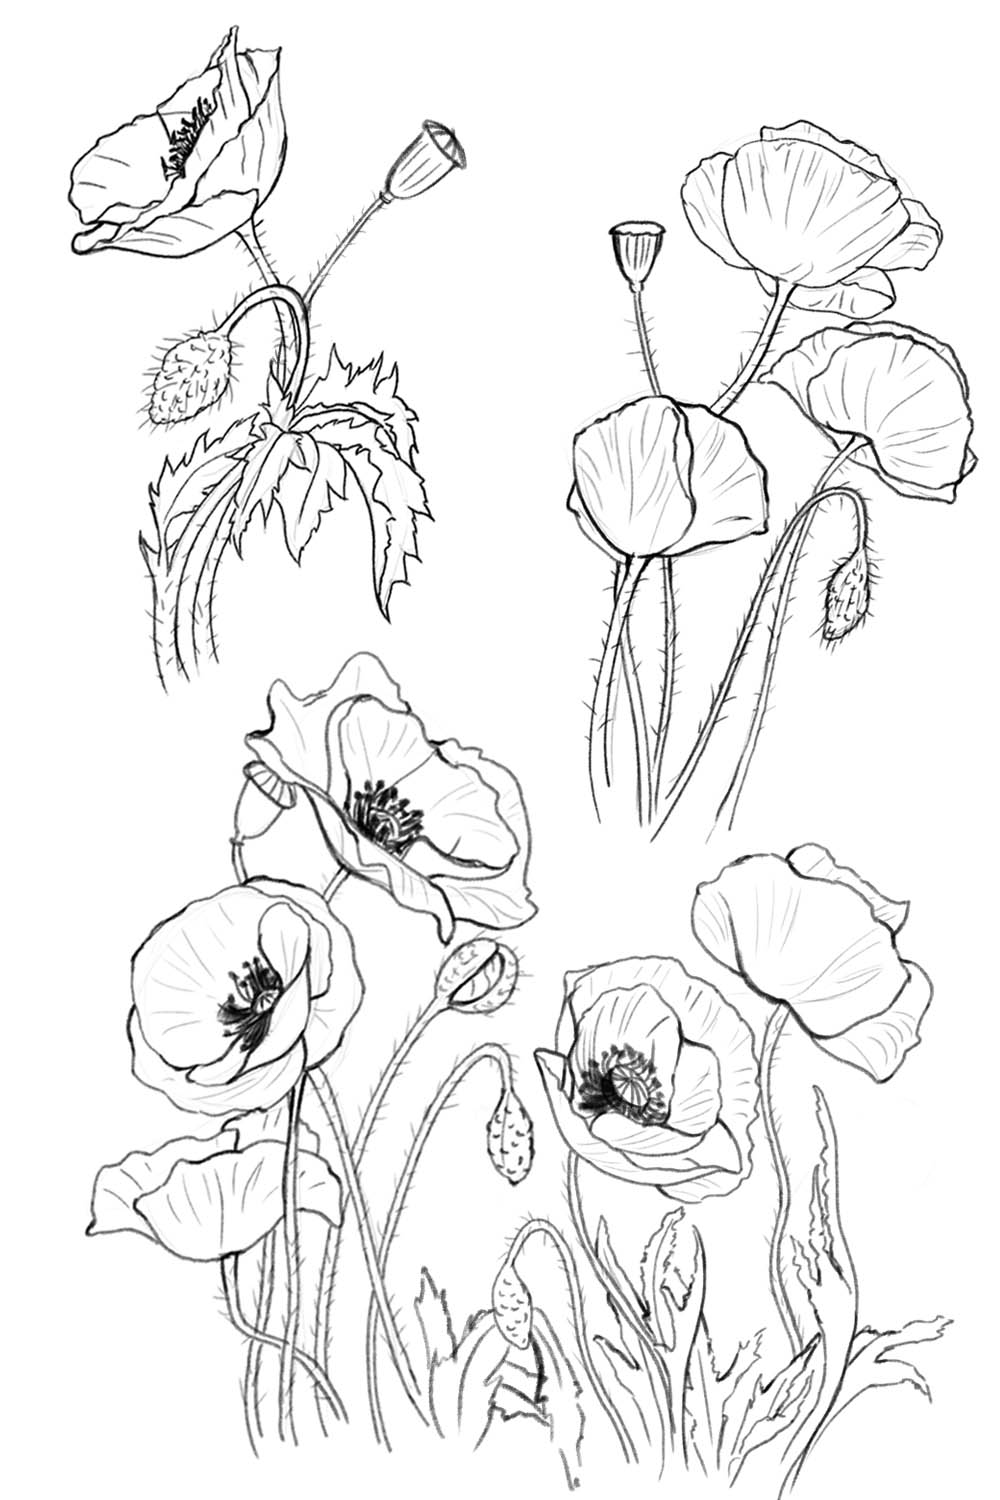 Digital sketches of poppy flowers.